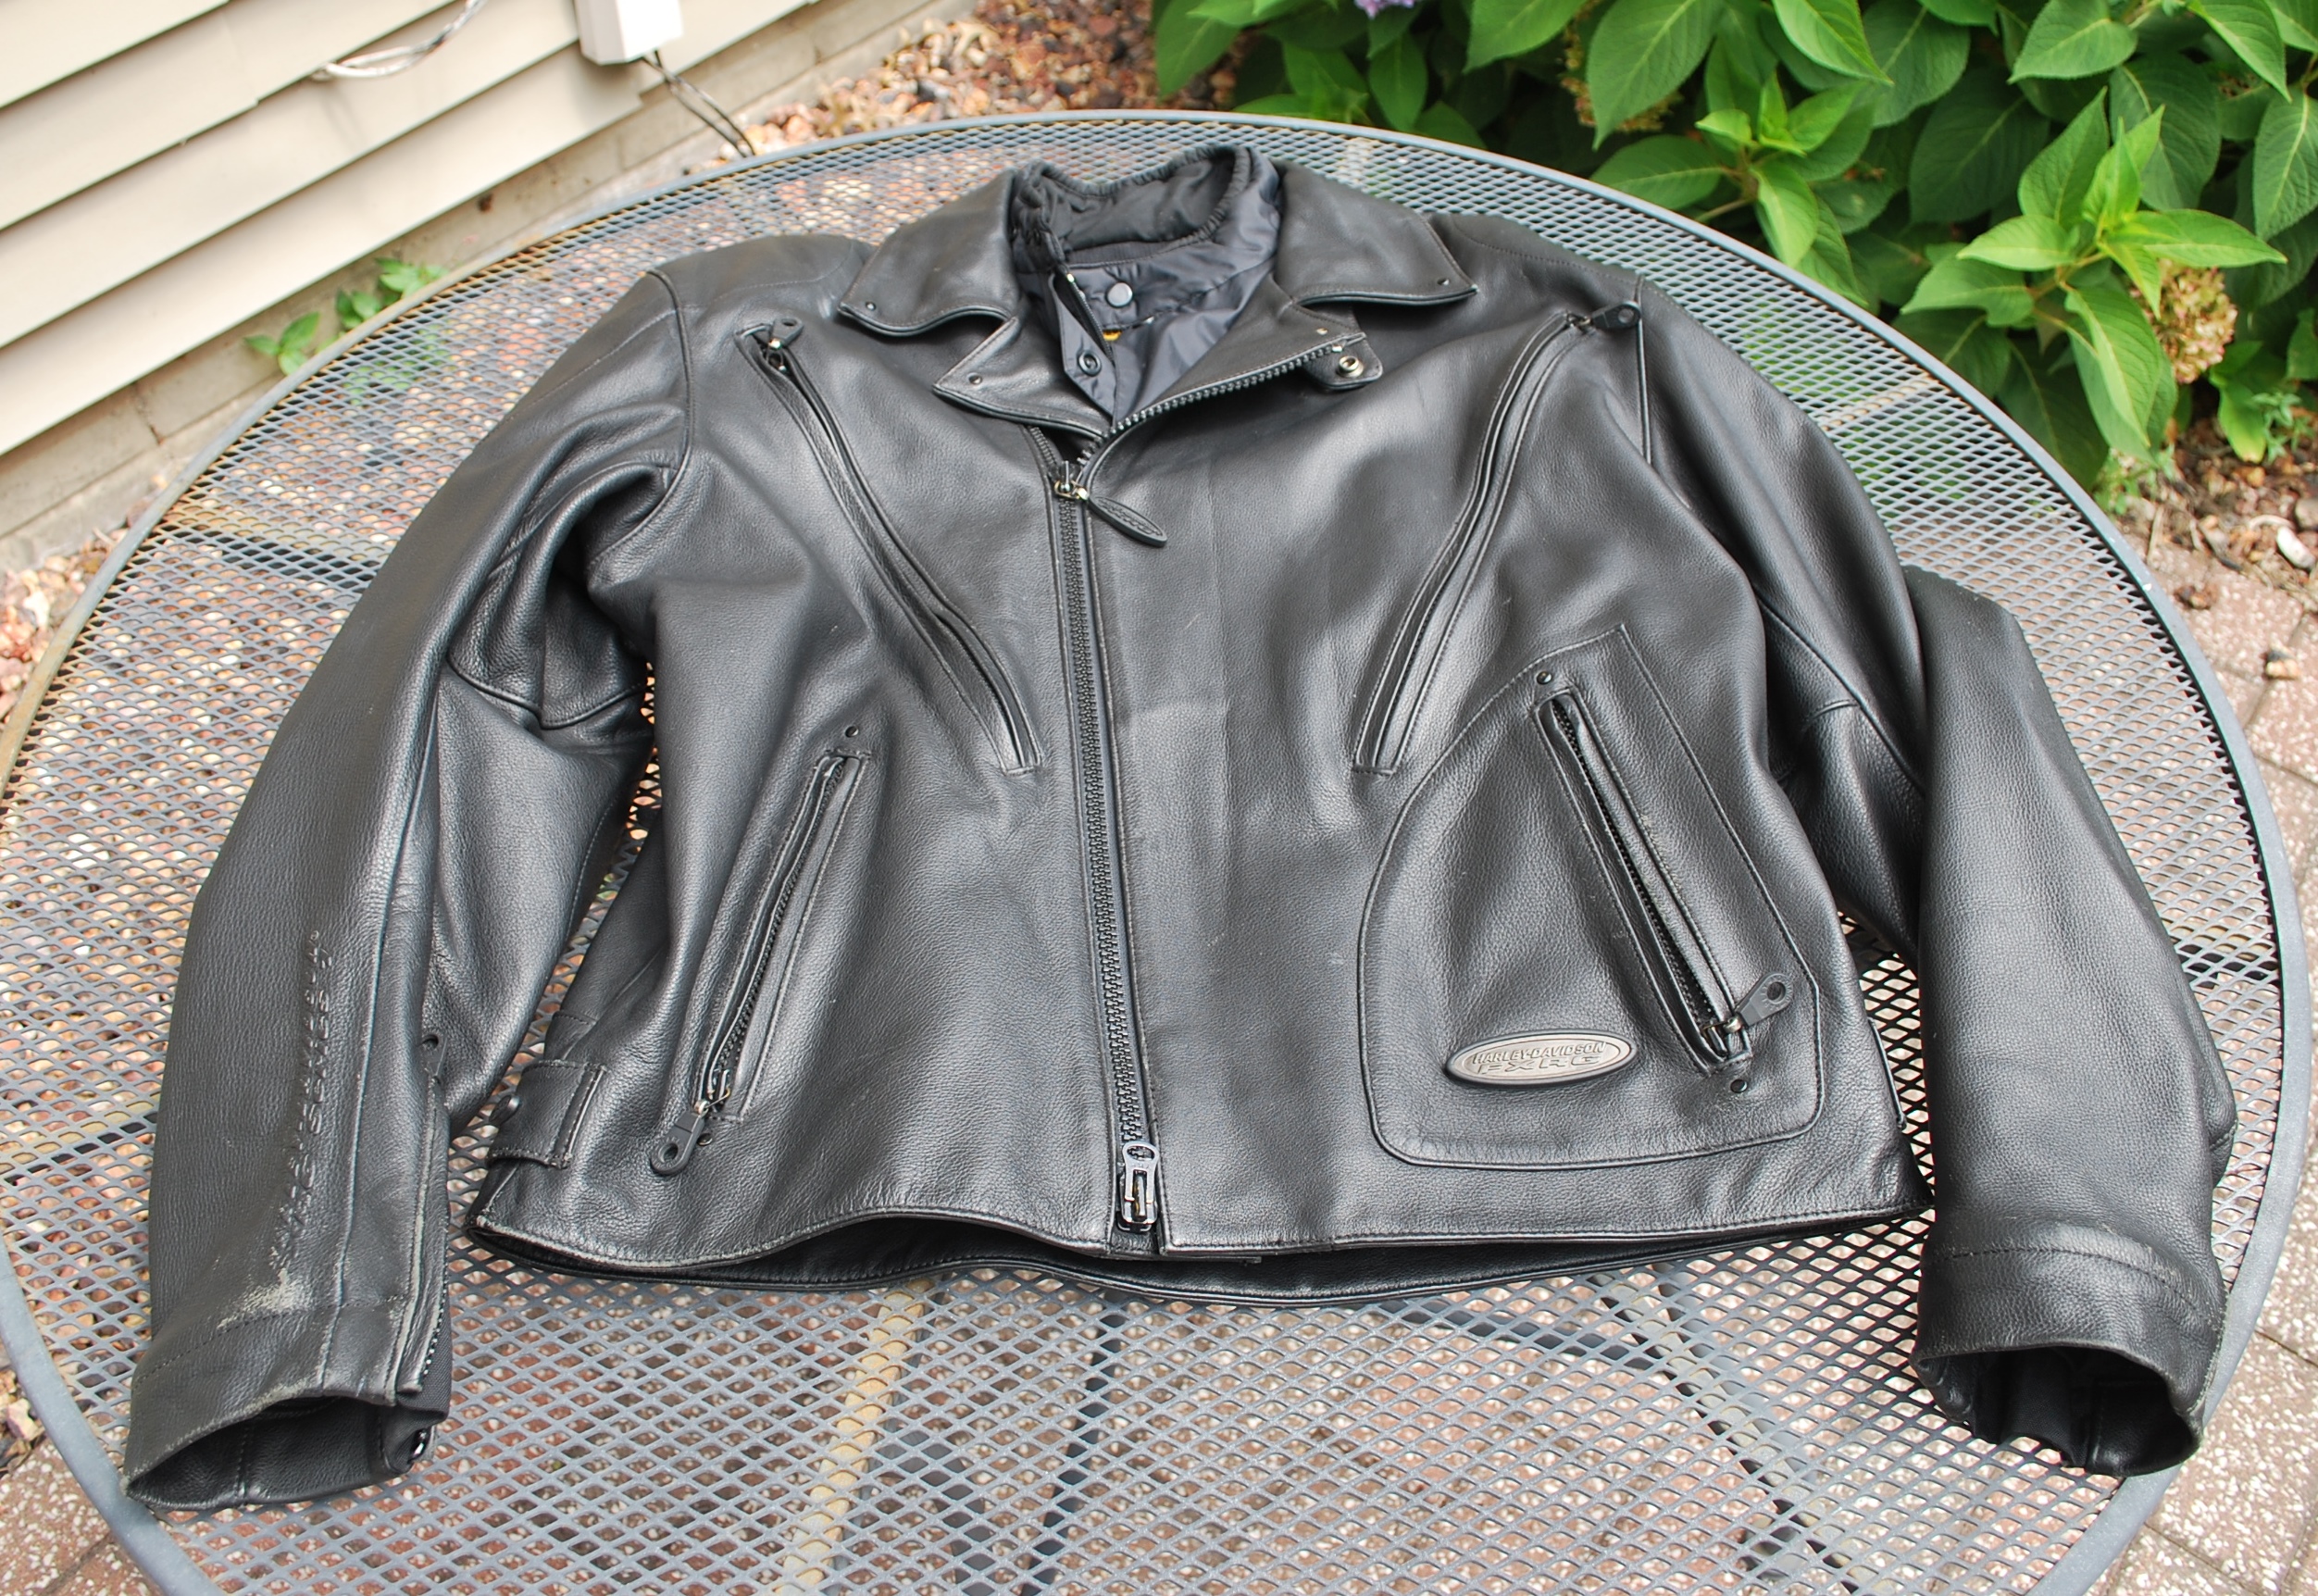 Hardly Davidson FXRG jacket - men's large black leather